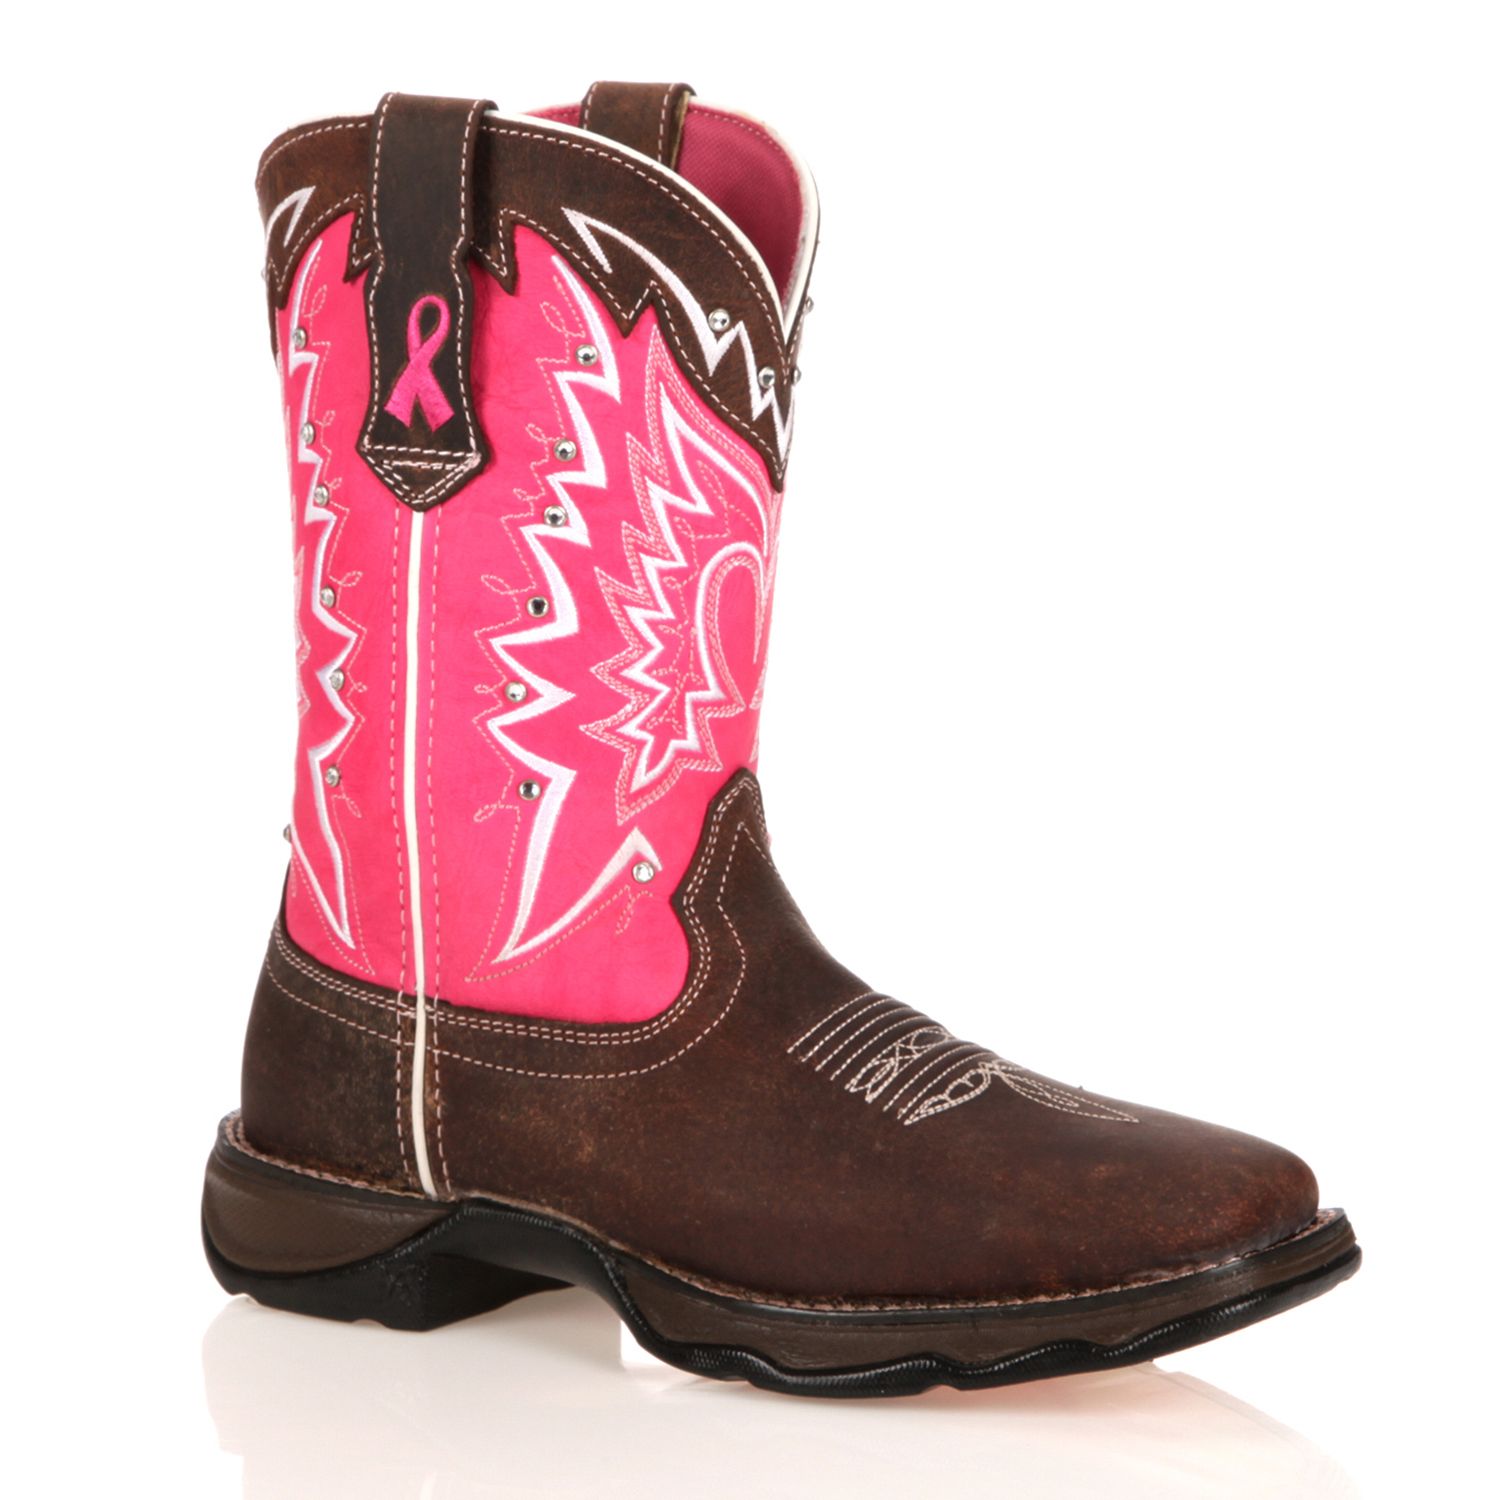 Image for Durango Pink Ribbon Lady Rebel Women's Cowboy Boots at Kohl's.